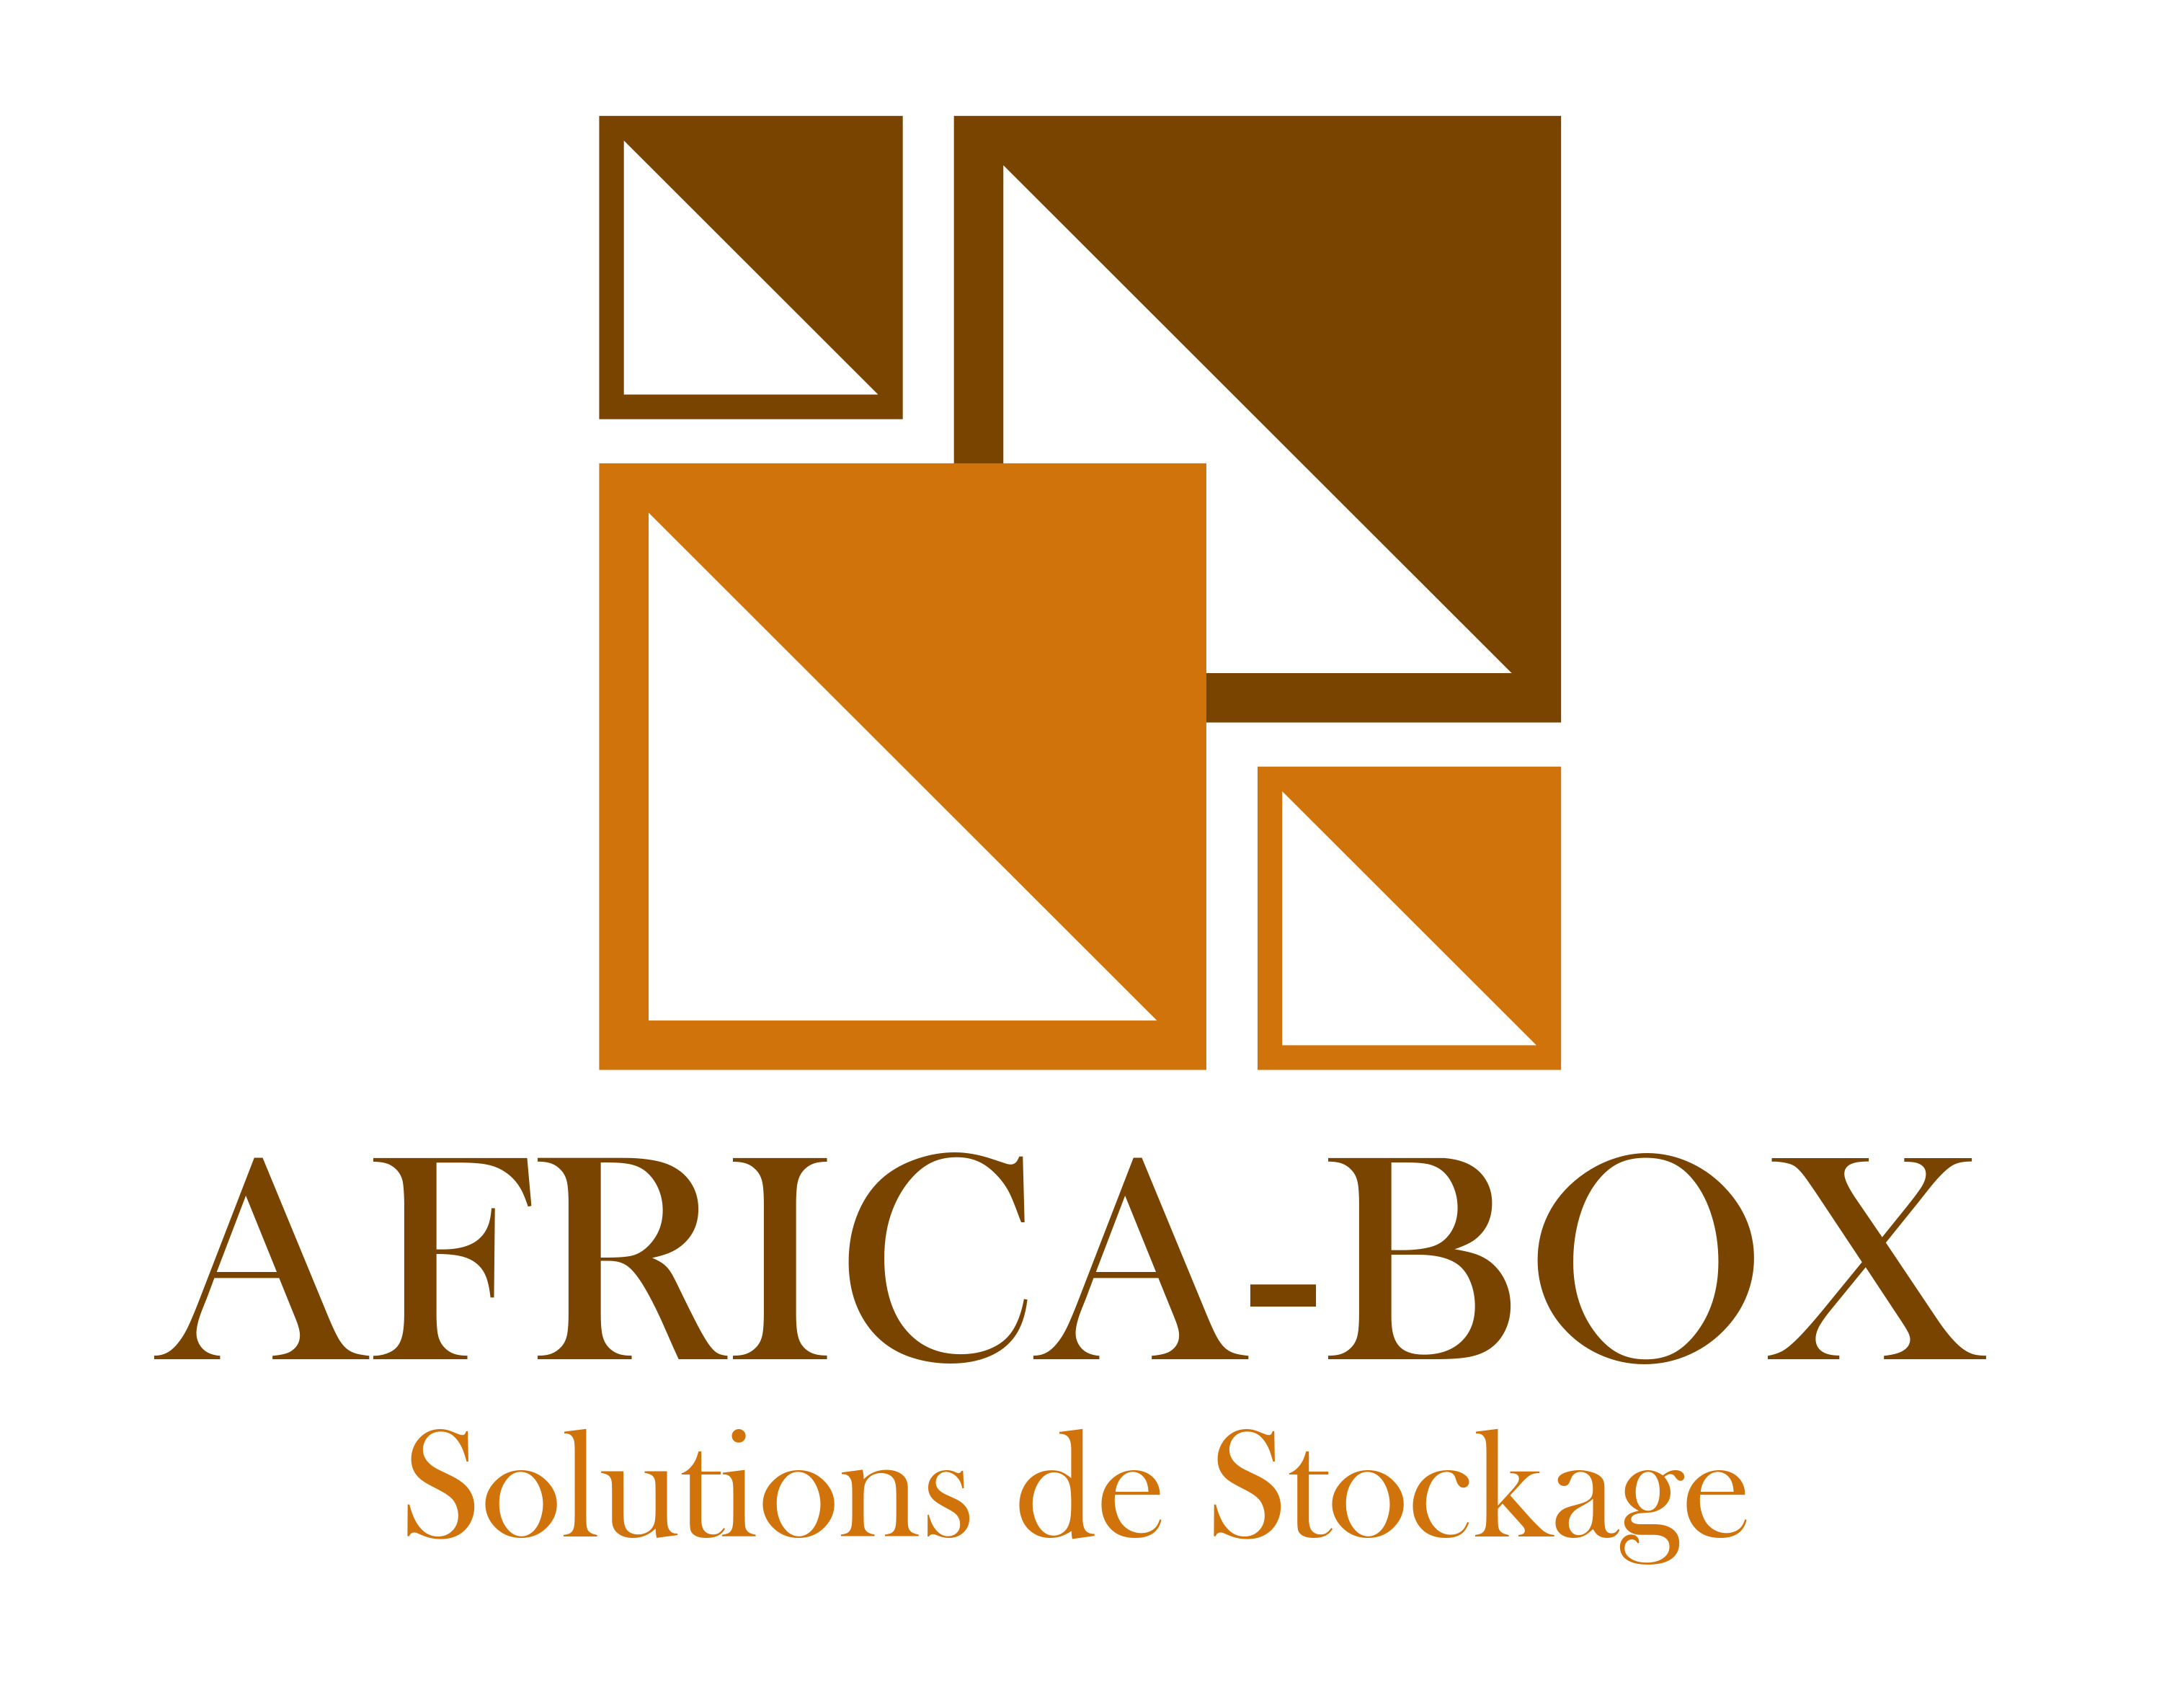 AFRICA-BOX